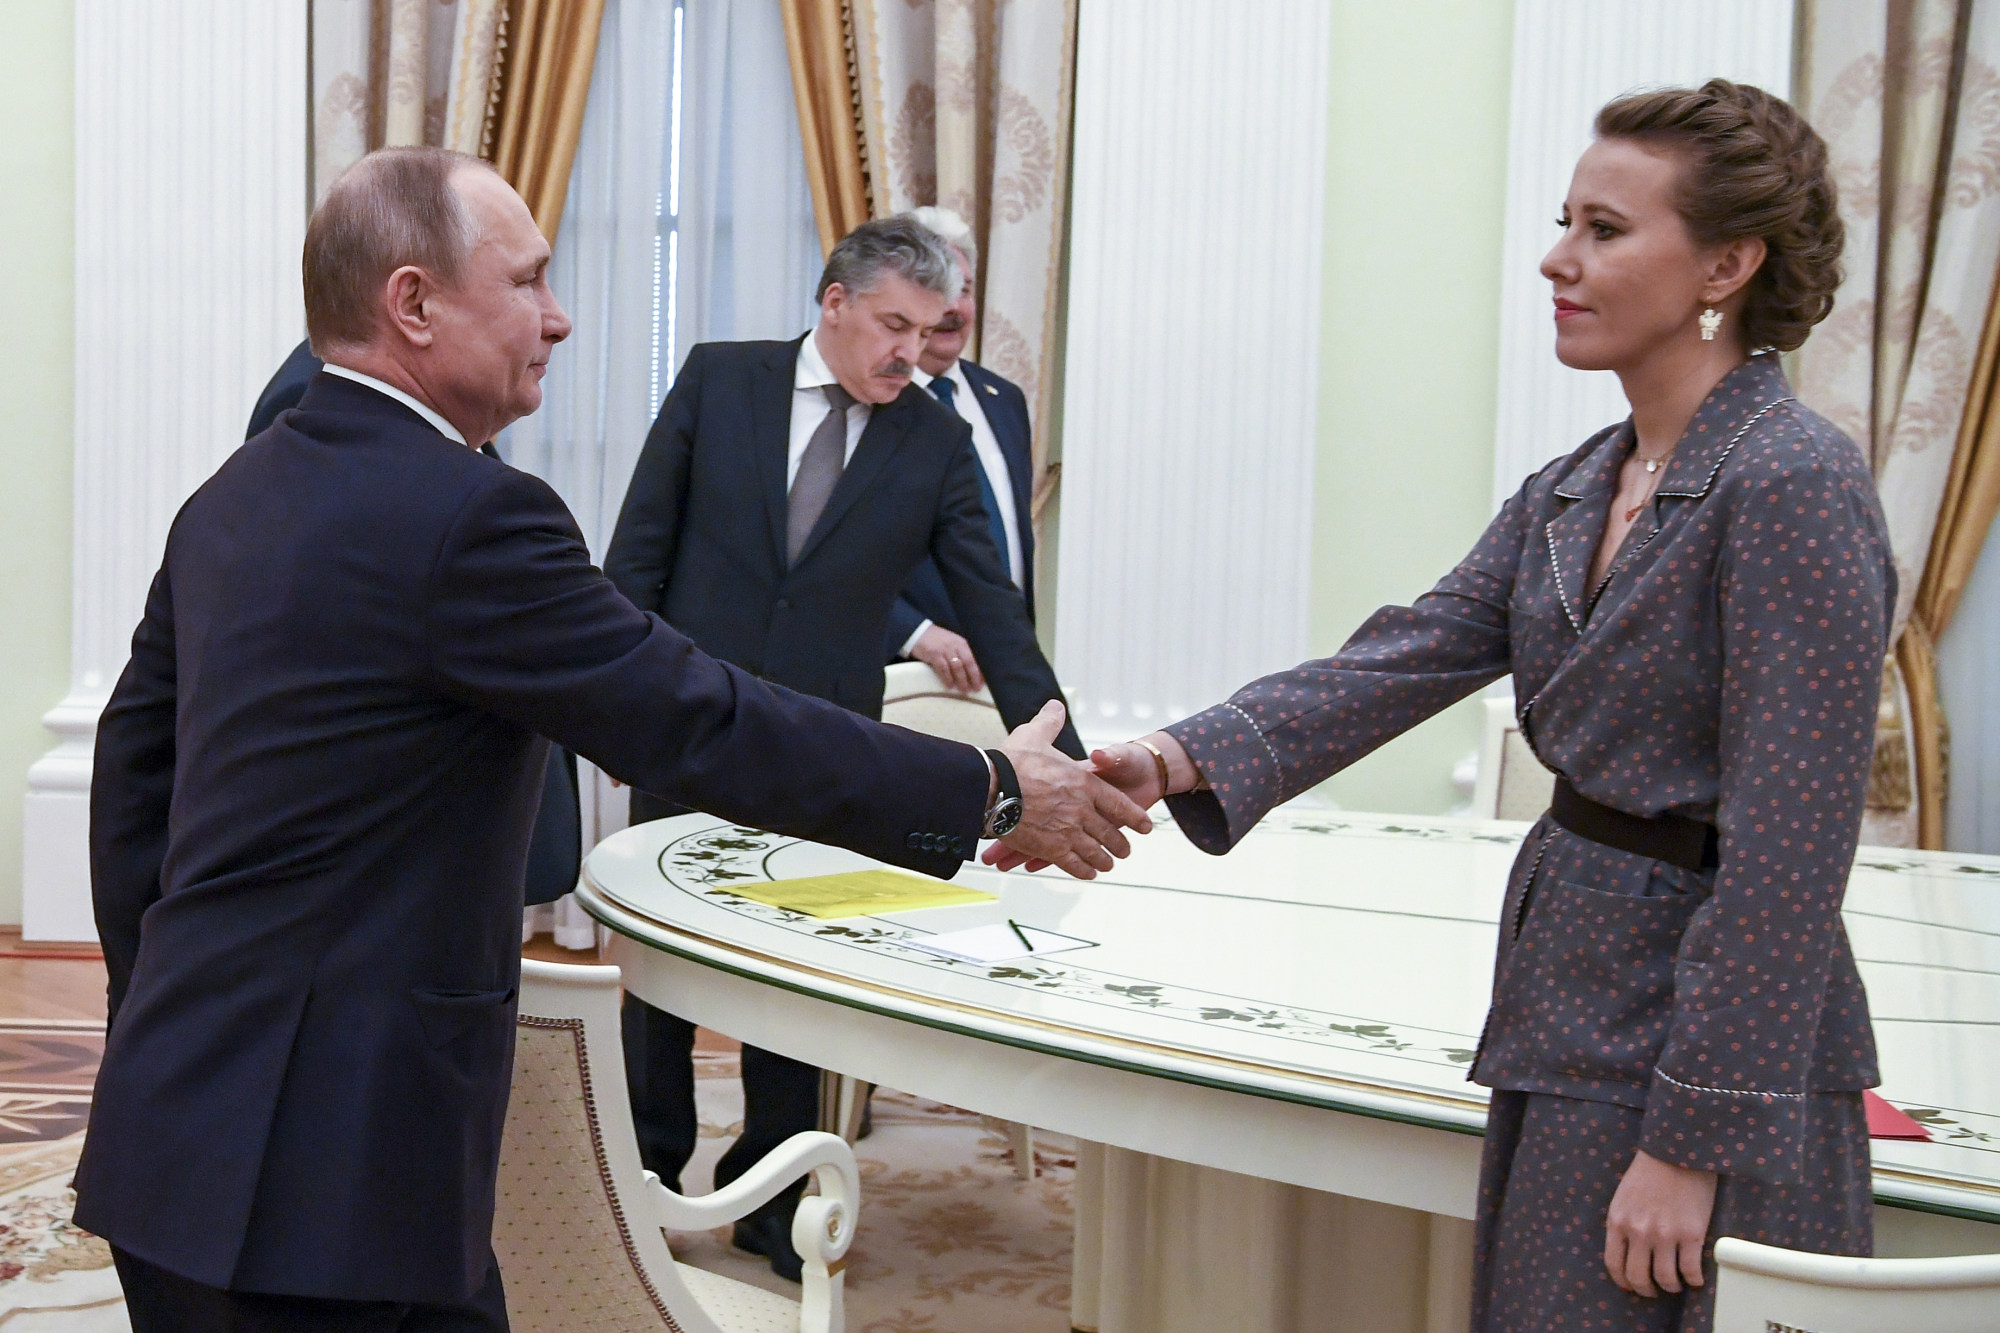 Ksenia Sobchak Celebrity Daughter Of Vladimir Putins One Time Boss Flees Russia As Home Is 